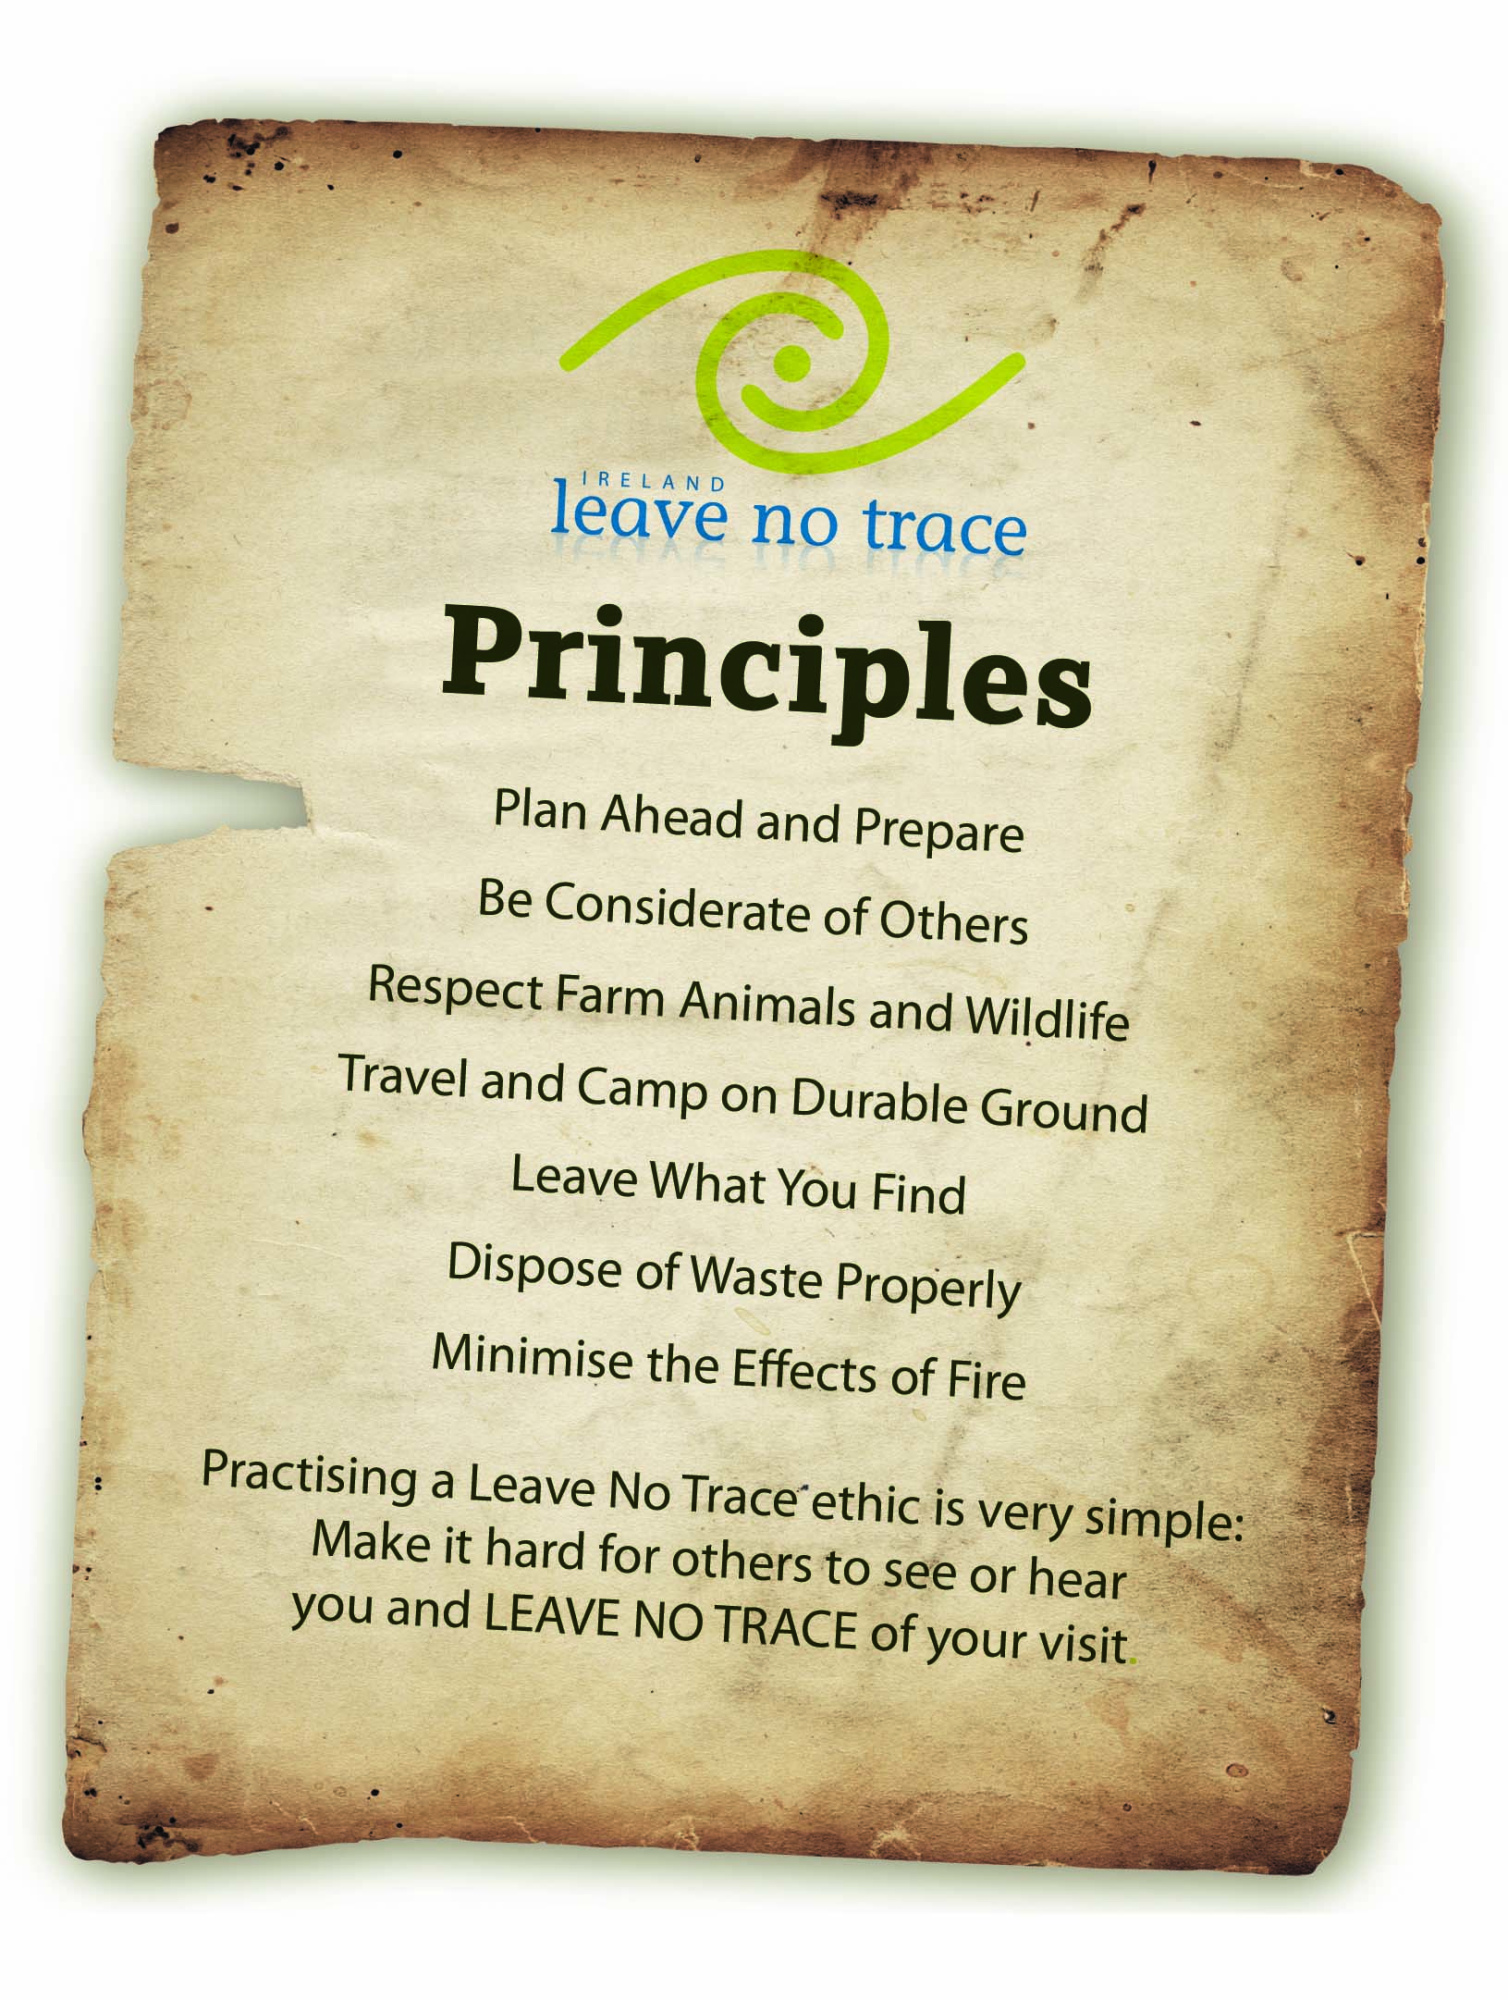 2 1 2 leave no trace principles image